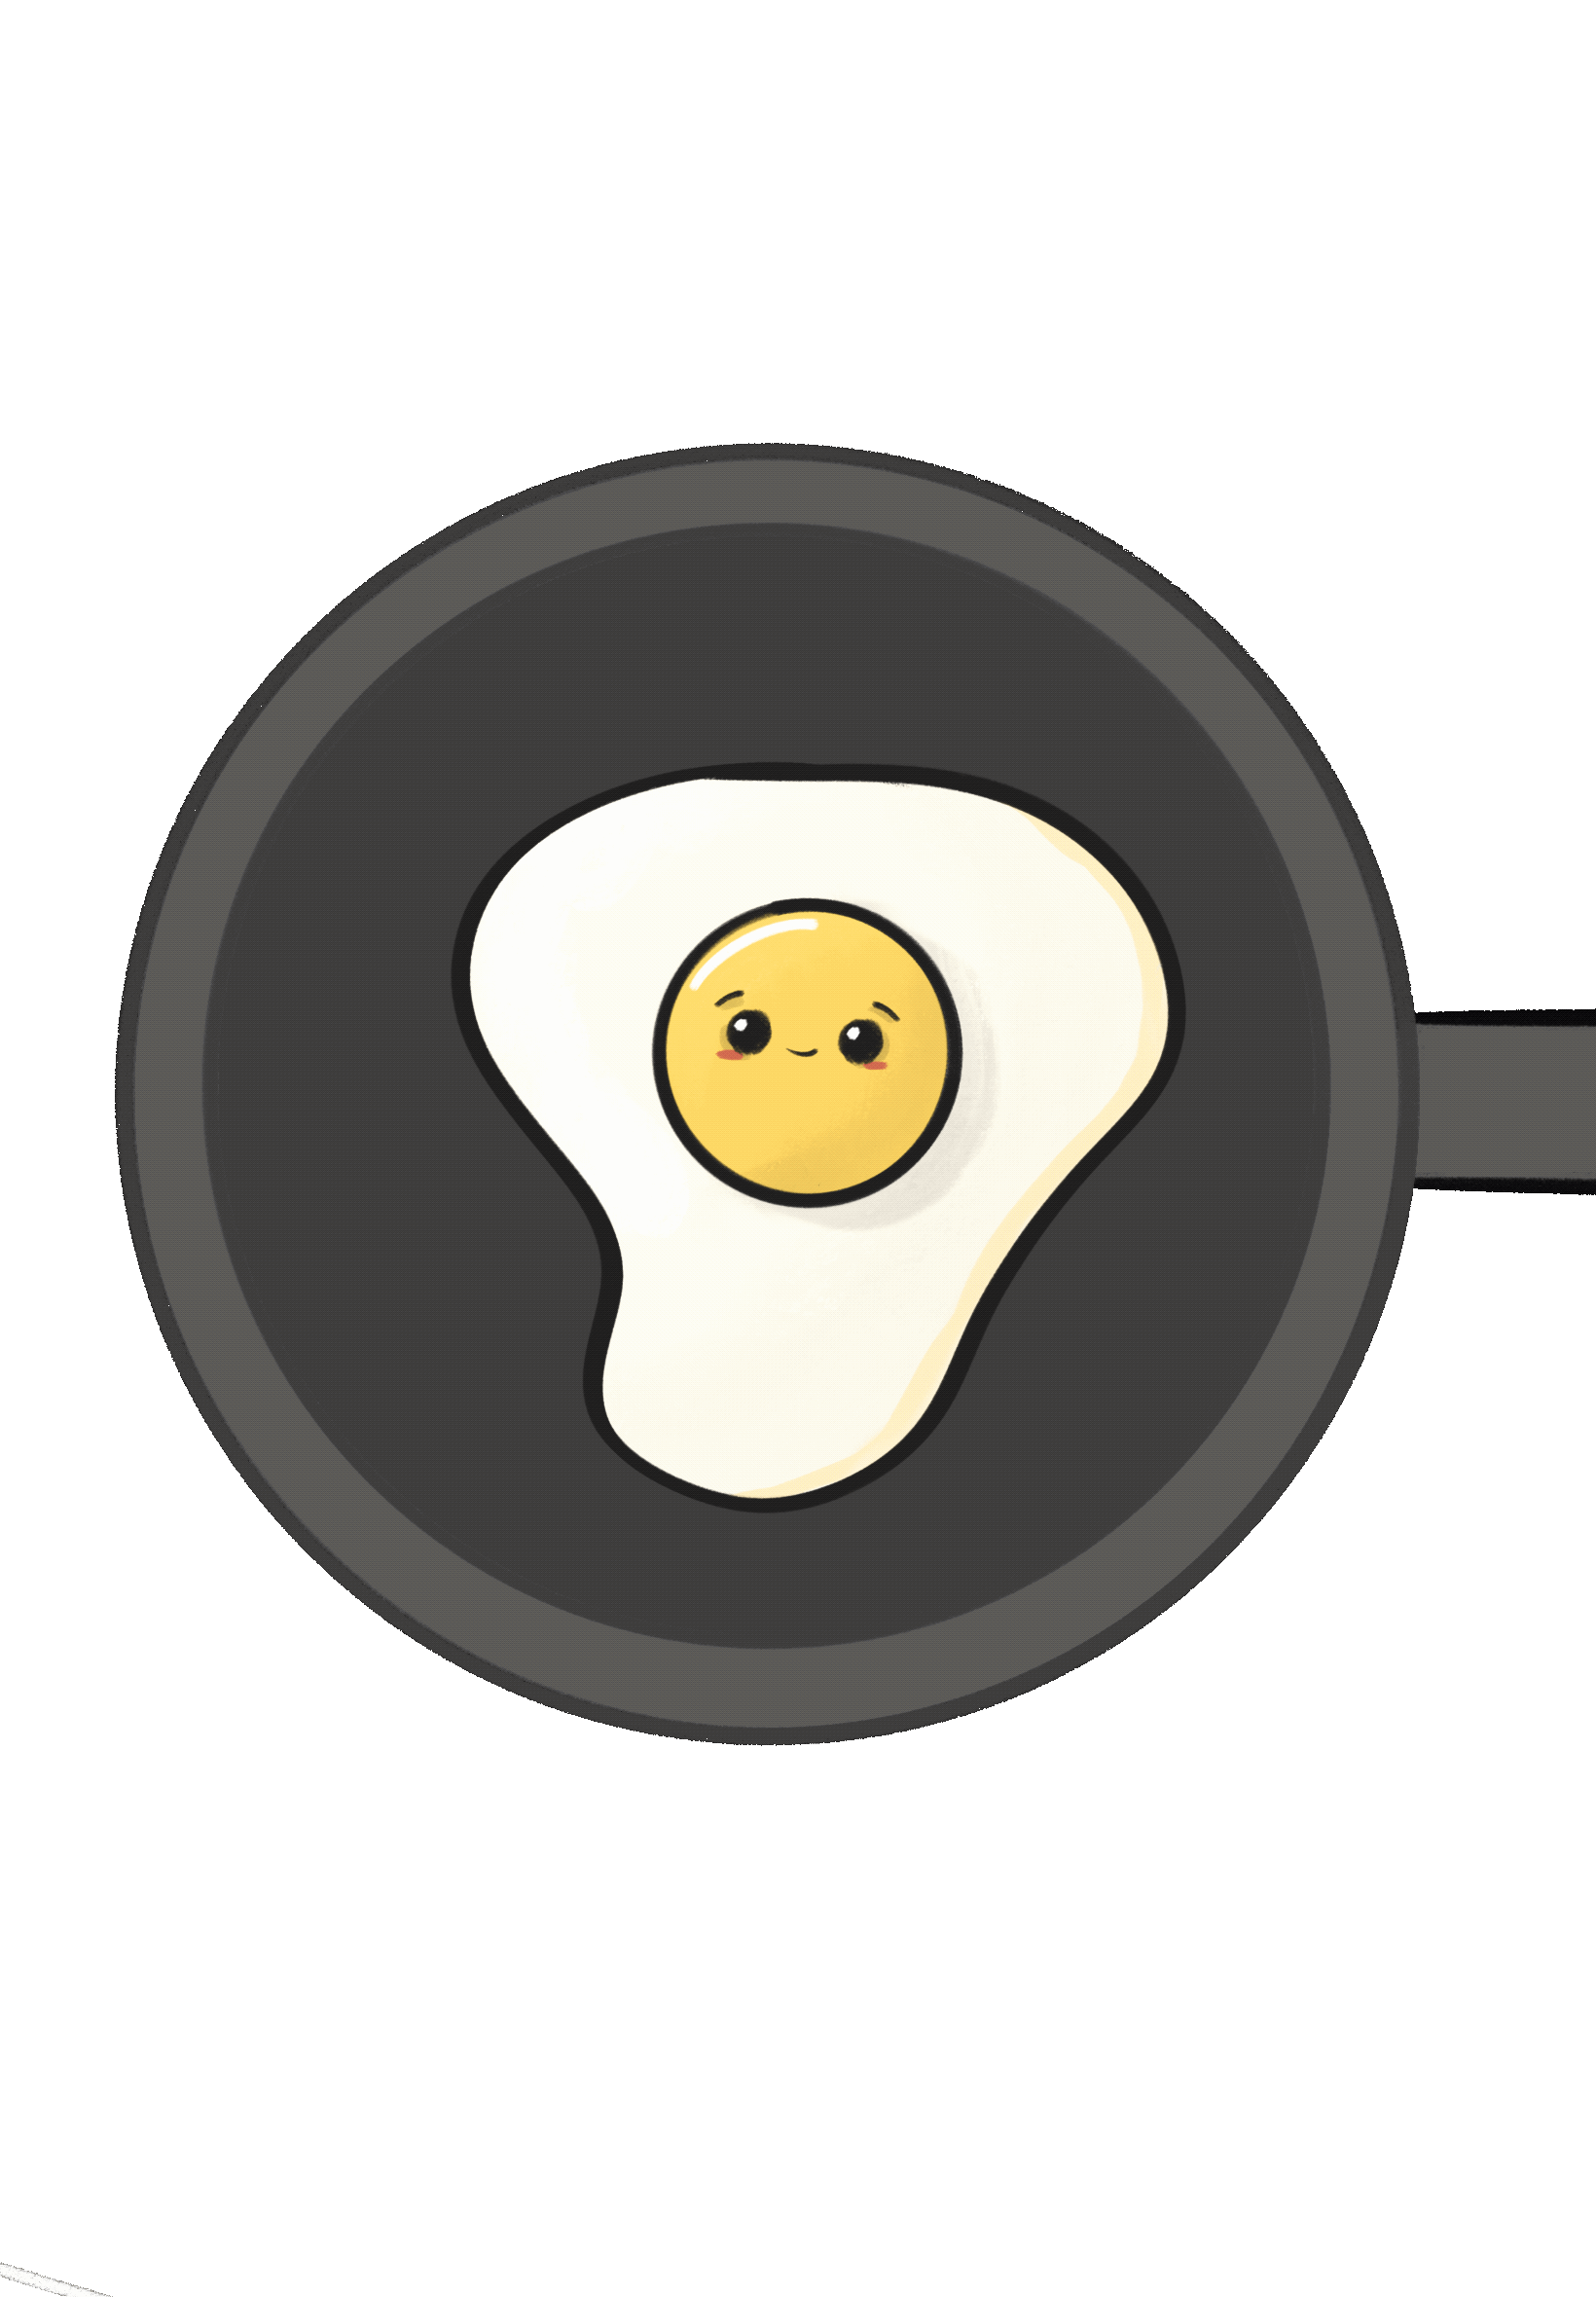 kawaii egg gif animation sticker loop animation branding cute graphic design logo motion graphics whimsical